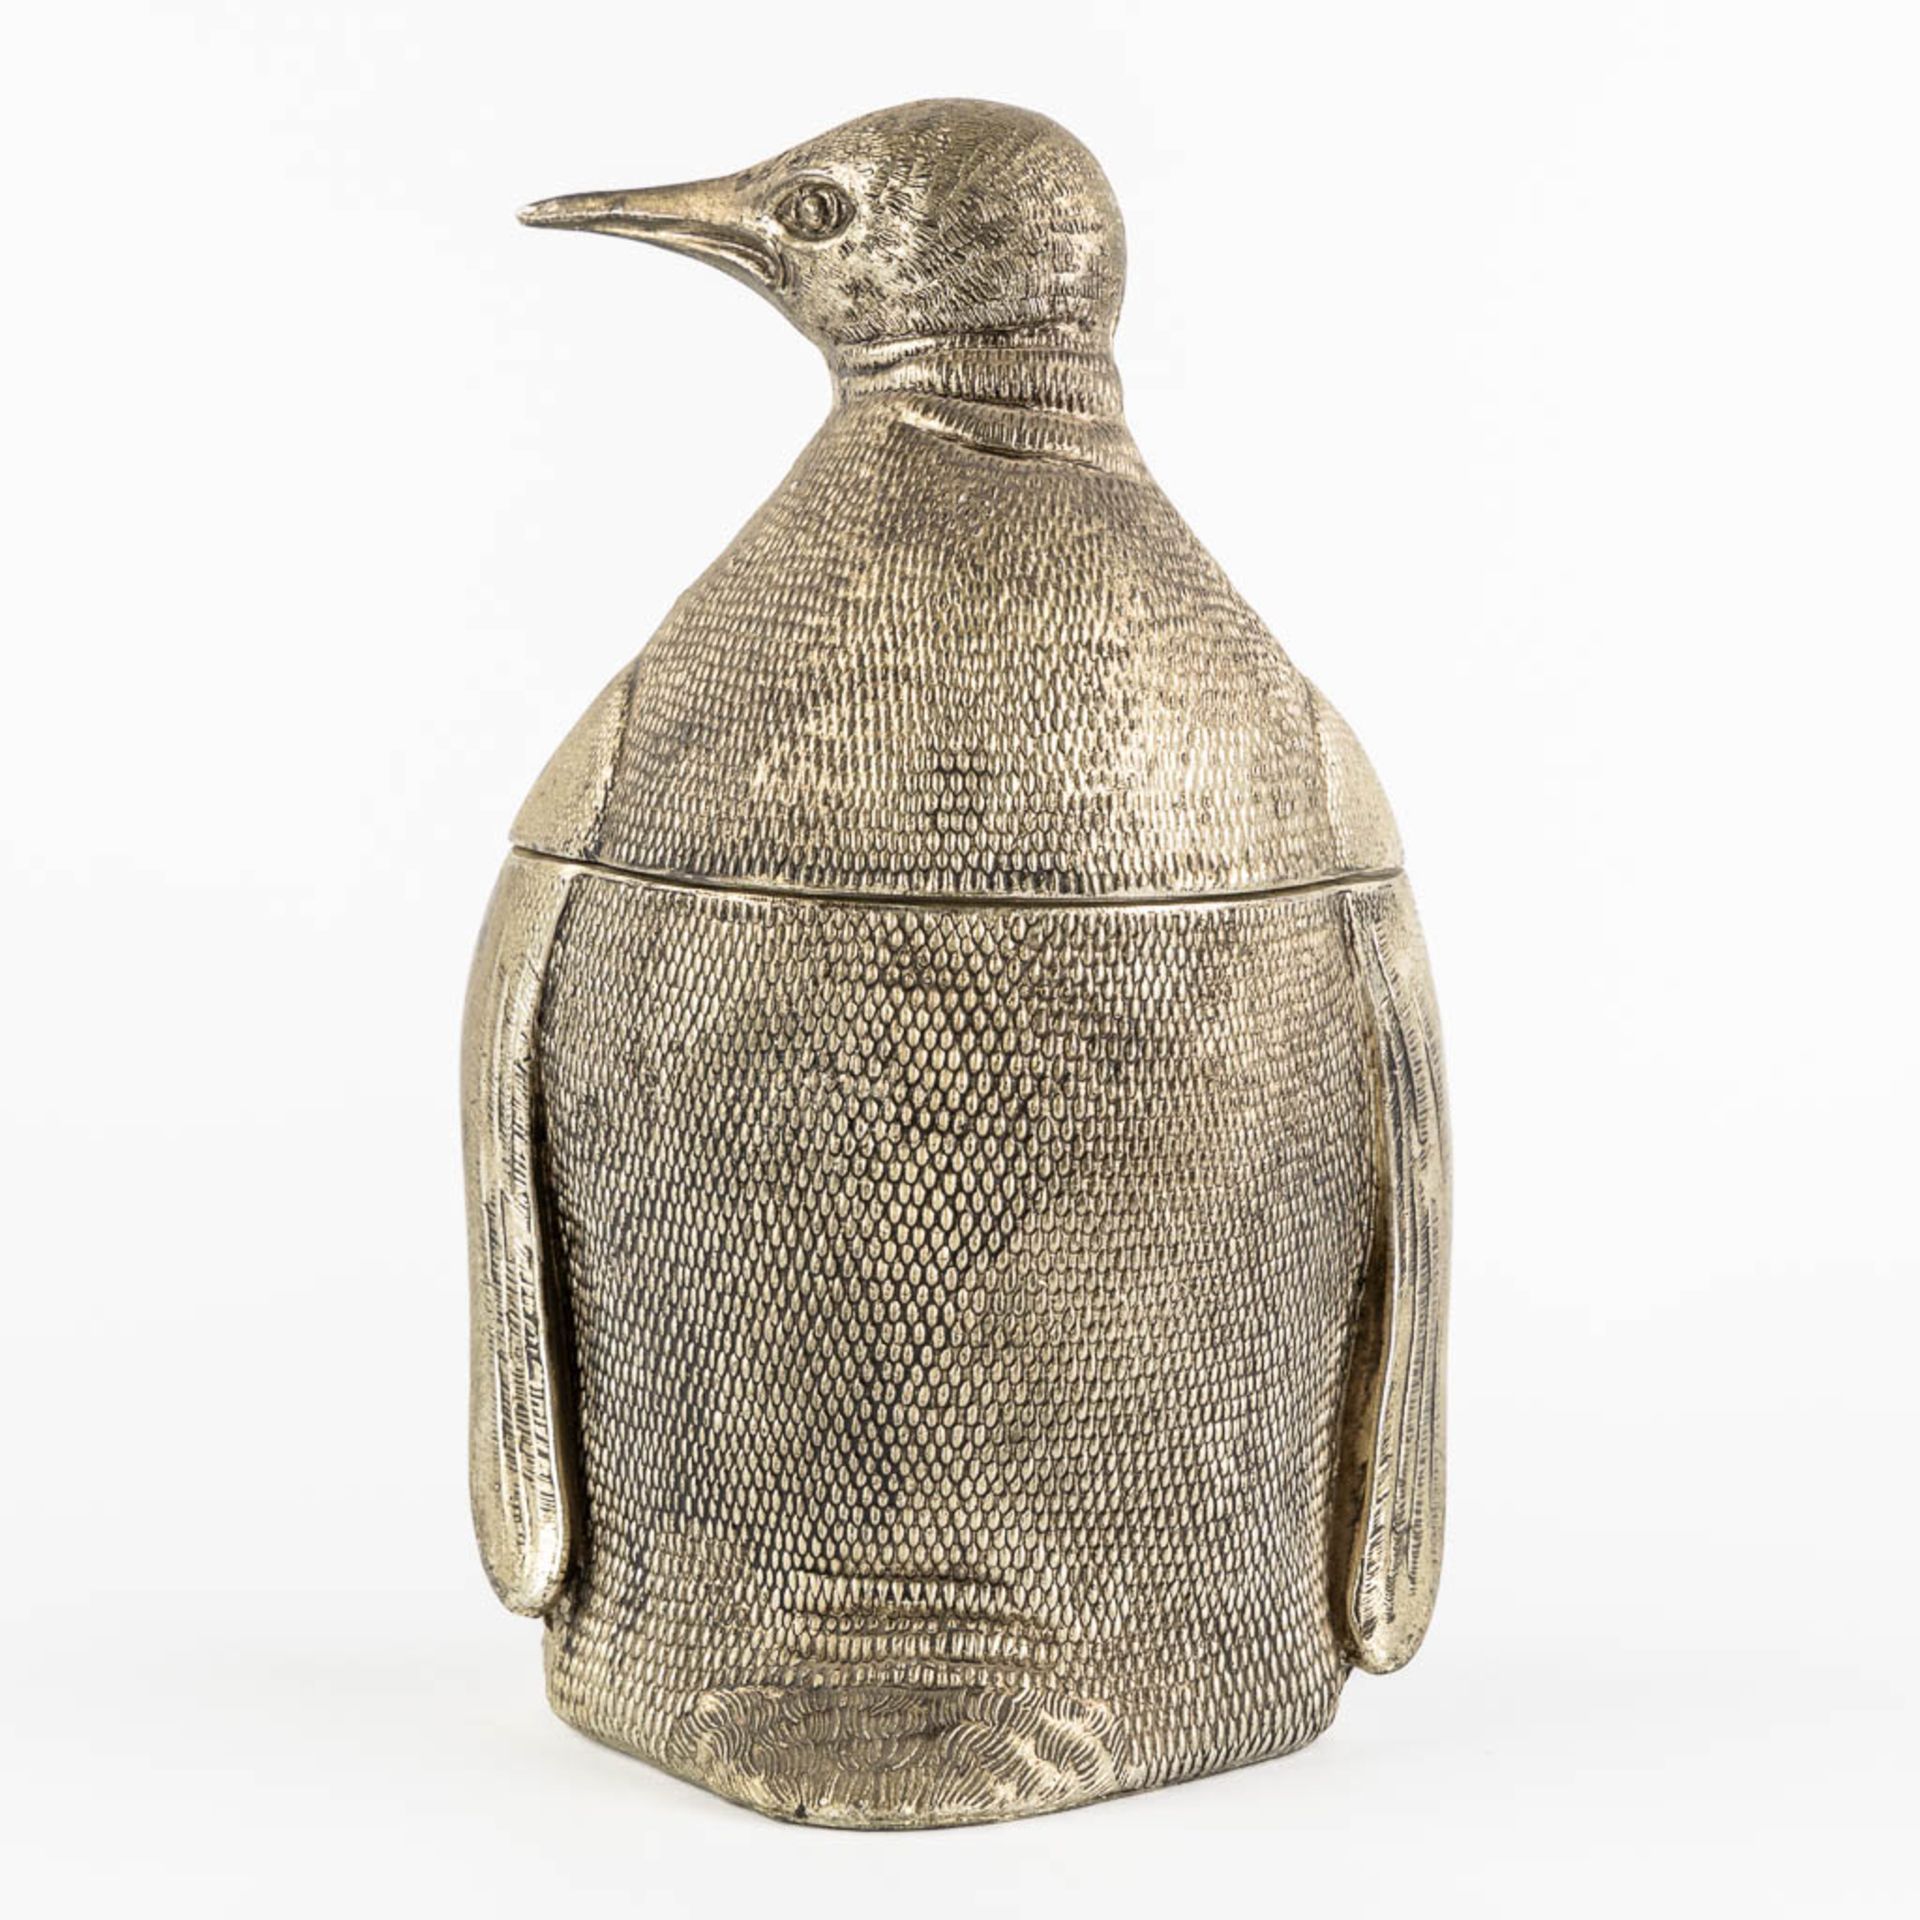 Mauro MANETTI (XX) 'Penguin' an ice pail. (L:15 x W:15,5 x H:26 cm) - Image 5 of 12